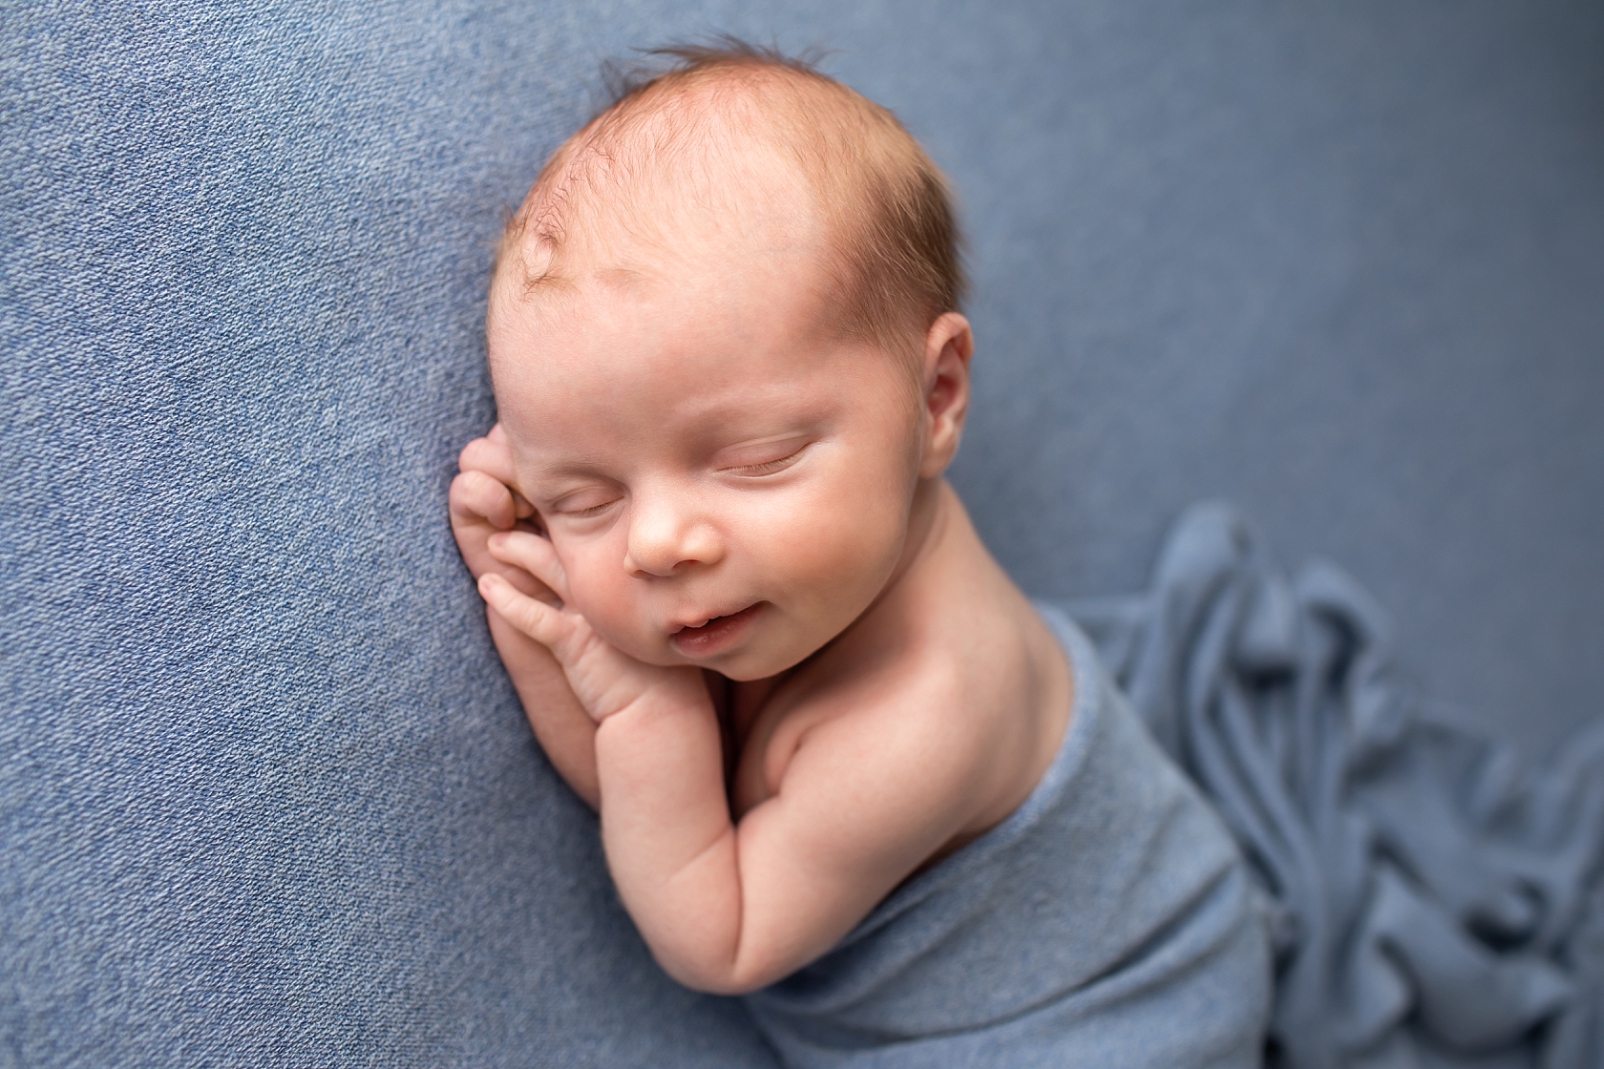 newborn boy with smile on blue fabric